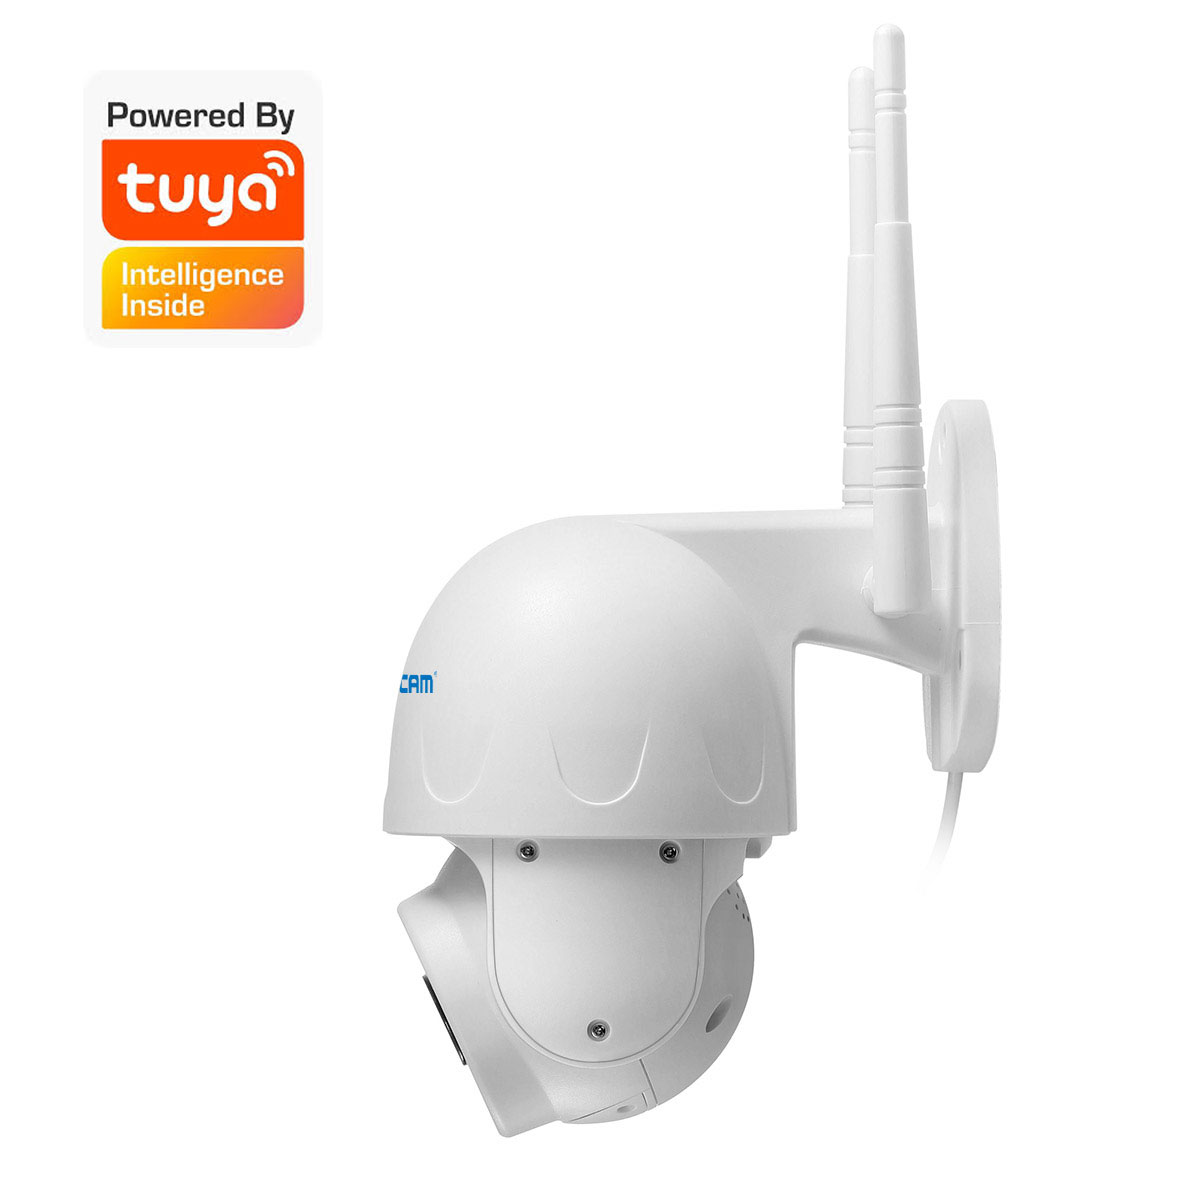 ESCAM-TY100-Tuya-H265-WiFi-IP-Camera-1080P-PanTilt-Outdoor--Two-Way-Audio-Voice-Alarm-Wifi-Camera-Wa-1823034-15